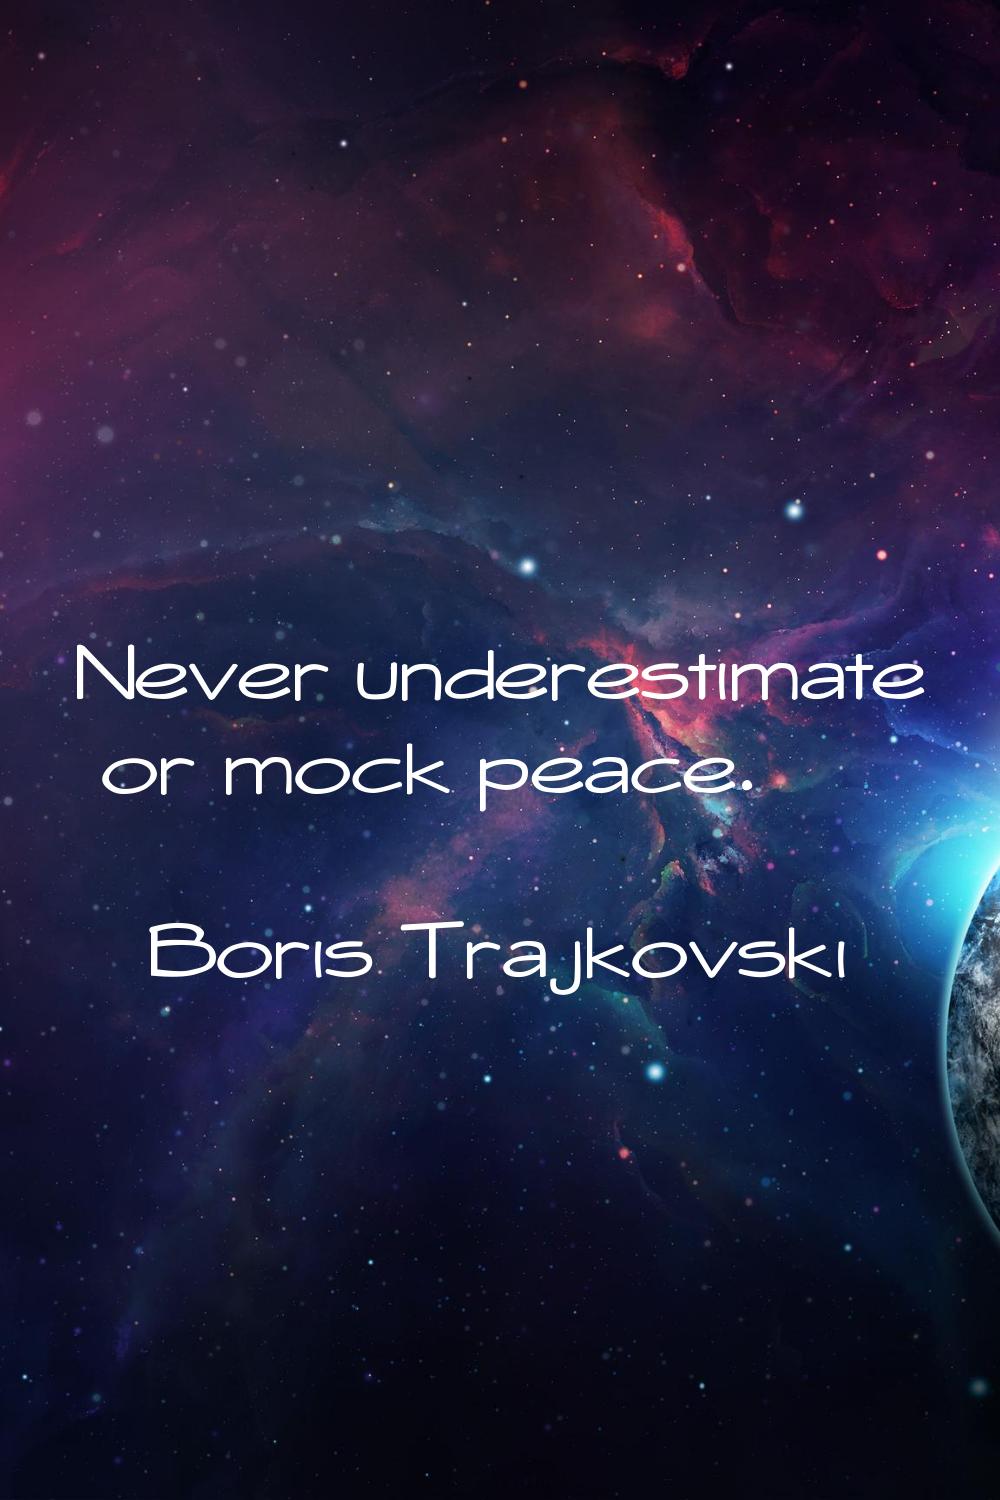 Never underestimate or mock peace.